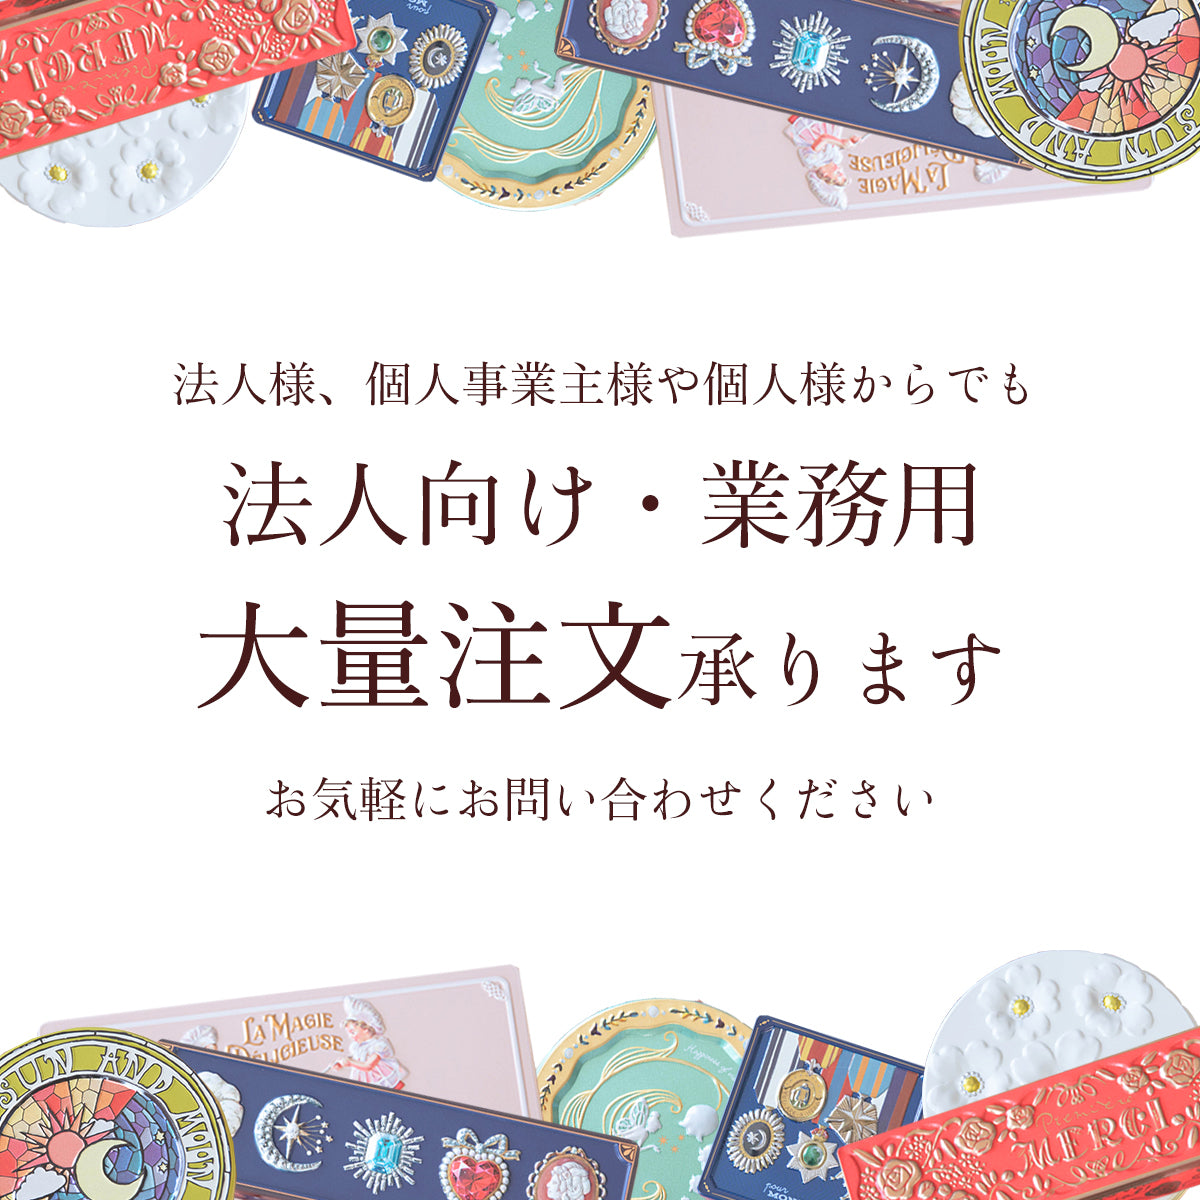 MERCIサブレ (プチギフト/サブレショコラ) ★4個以上で送料無料★ クッキー缶